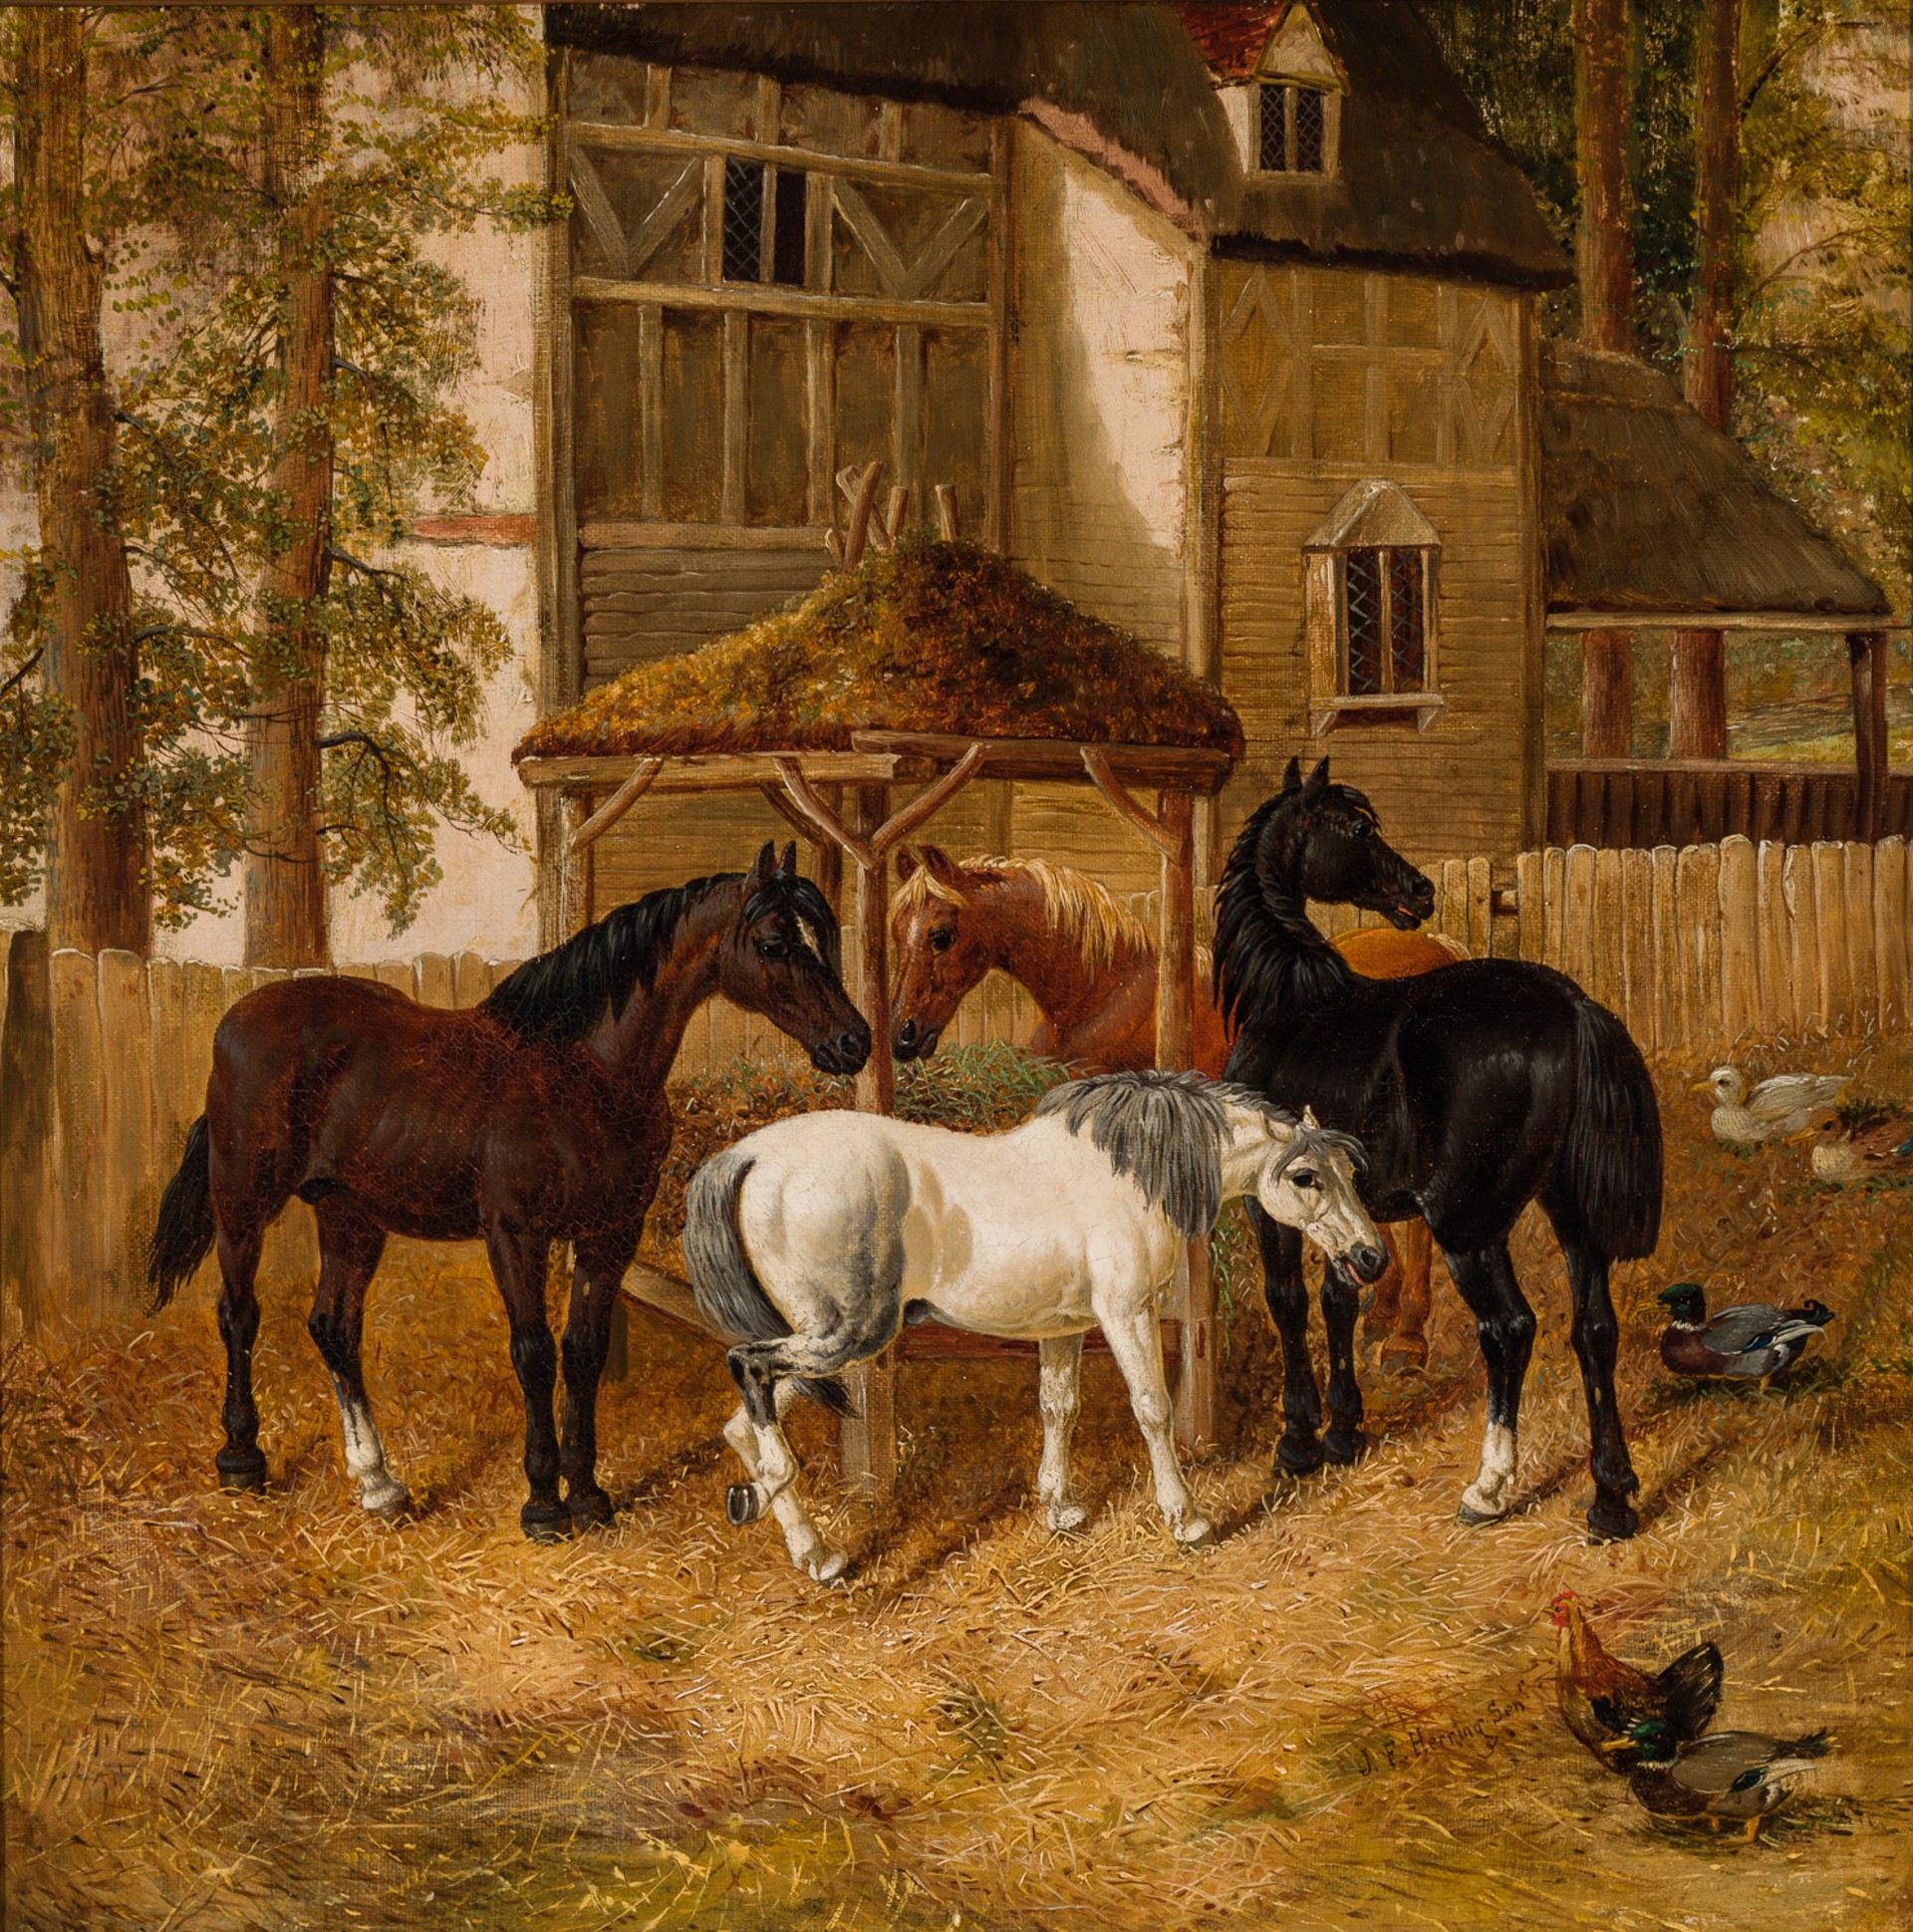 HORSES IN A LANDSCAPE by John Frederick Herring Sr.